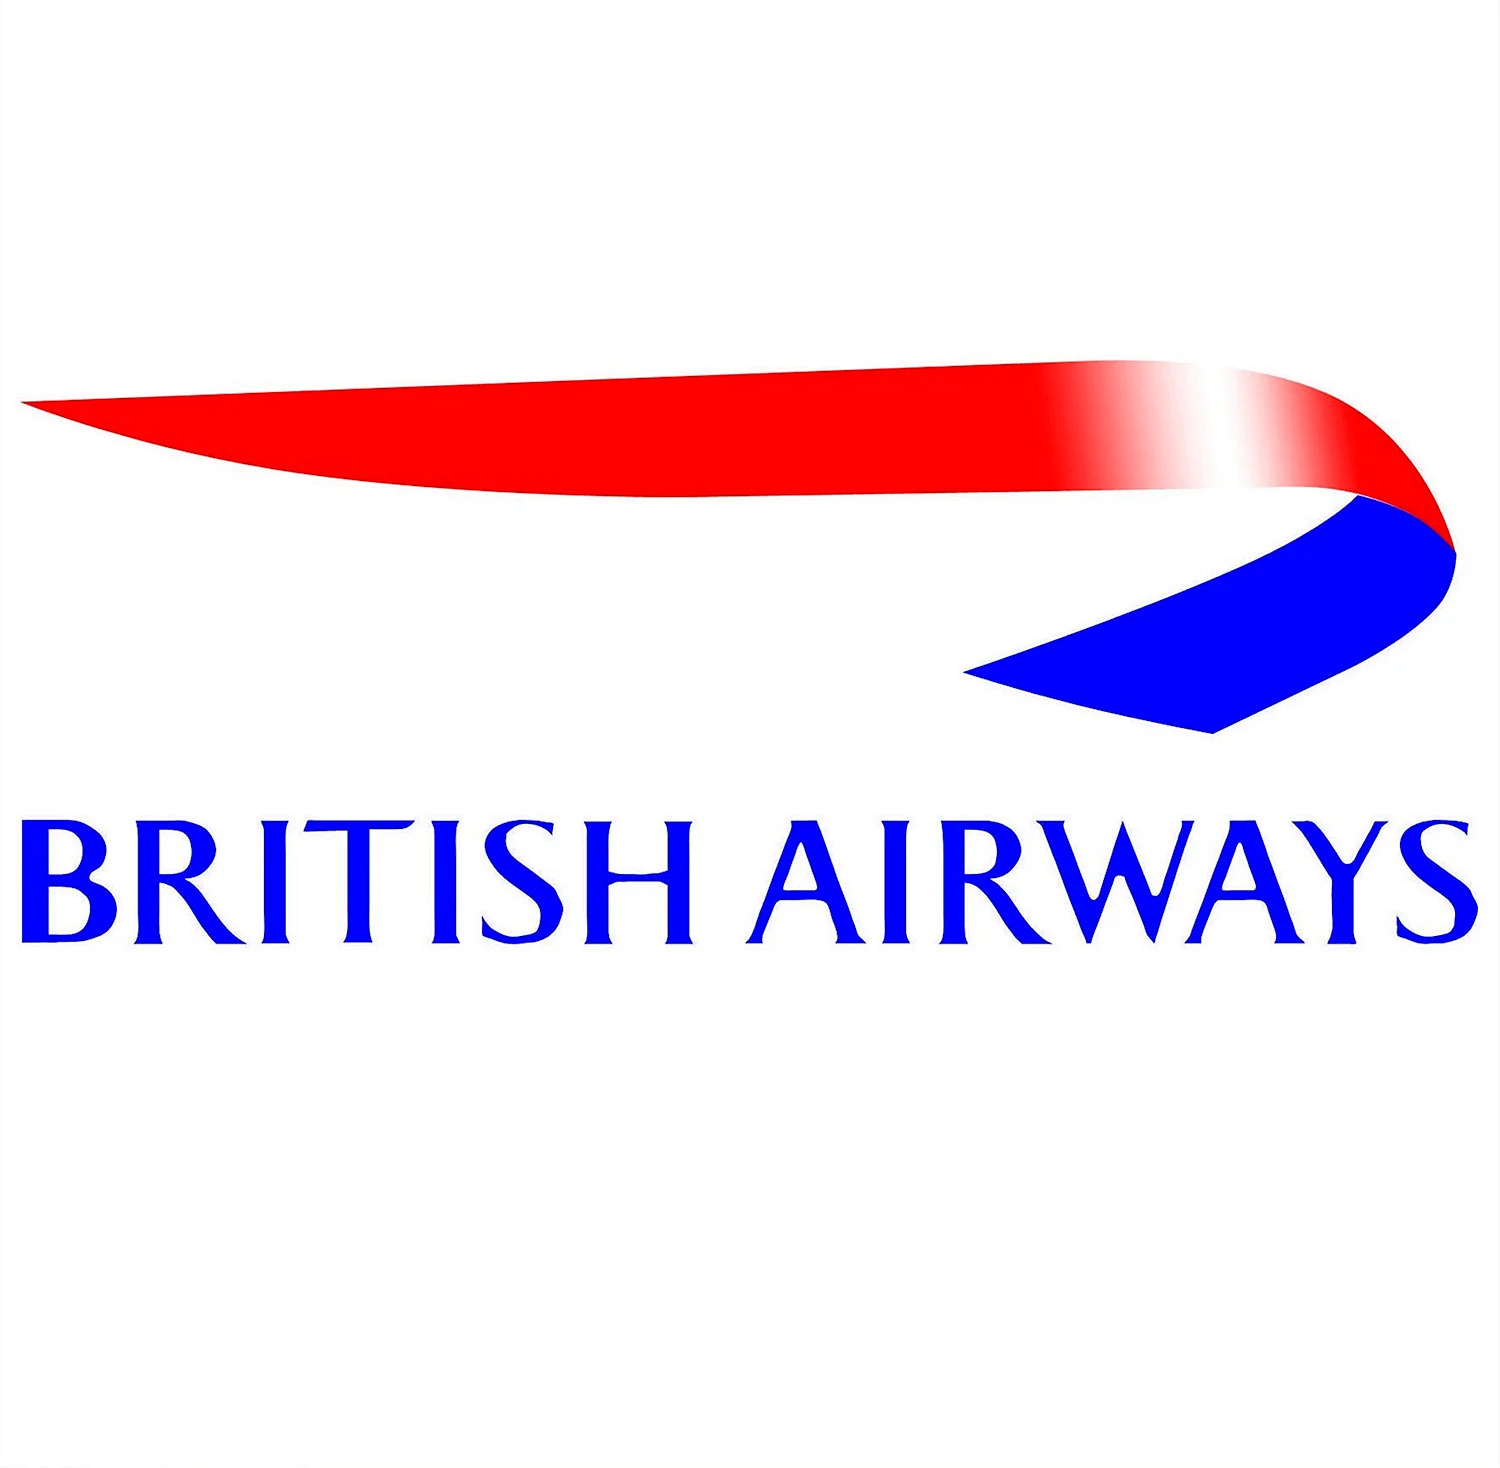 Британские авиалинии логотип